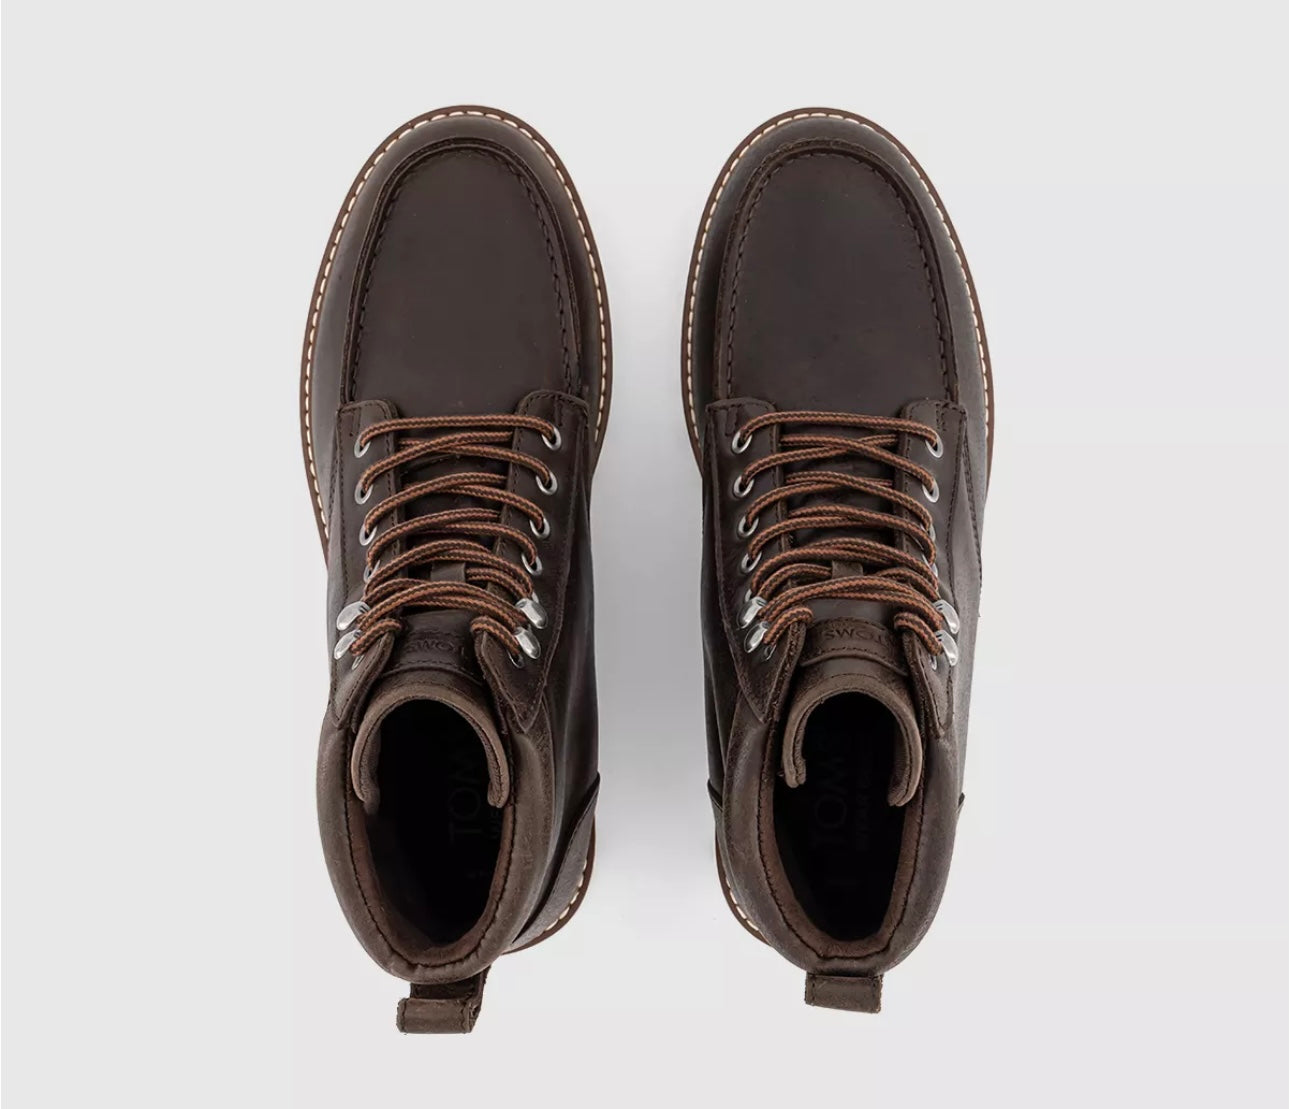 TOMS Mens Palomar Leather Boot - Tan